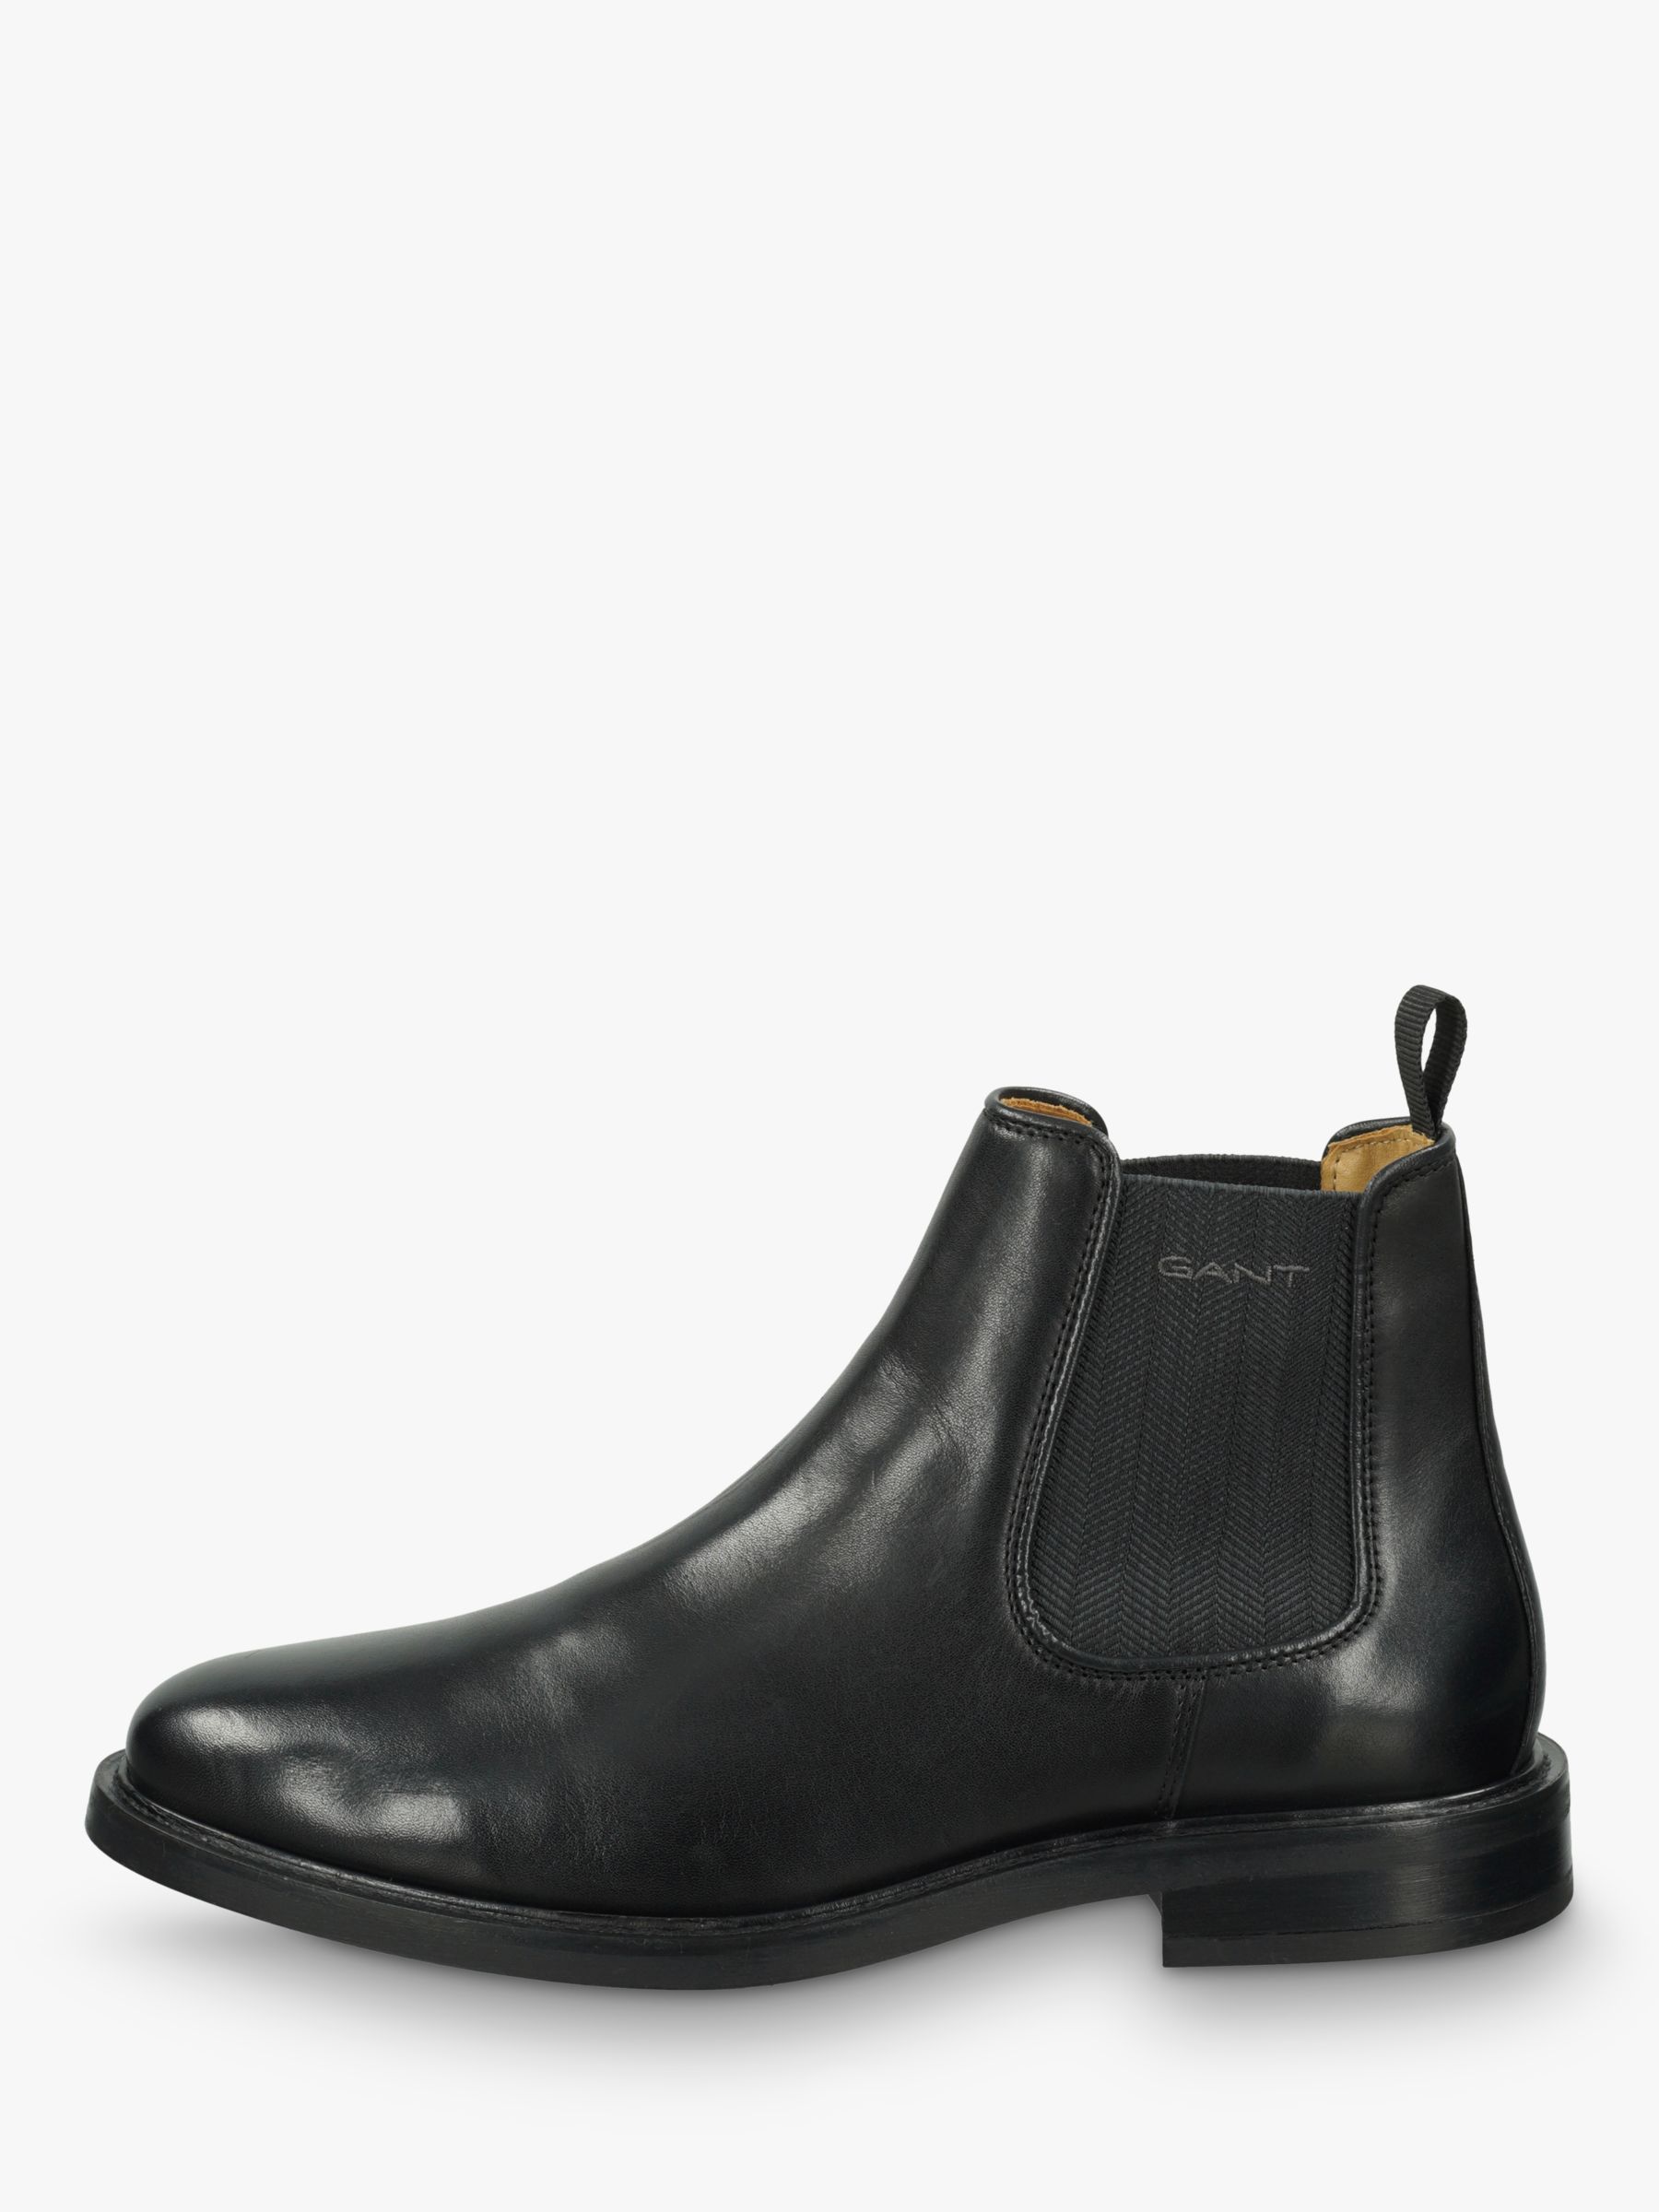 GANT St Akron Leather Chelsea Boots, Black at John Lewis & Partners